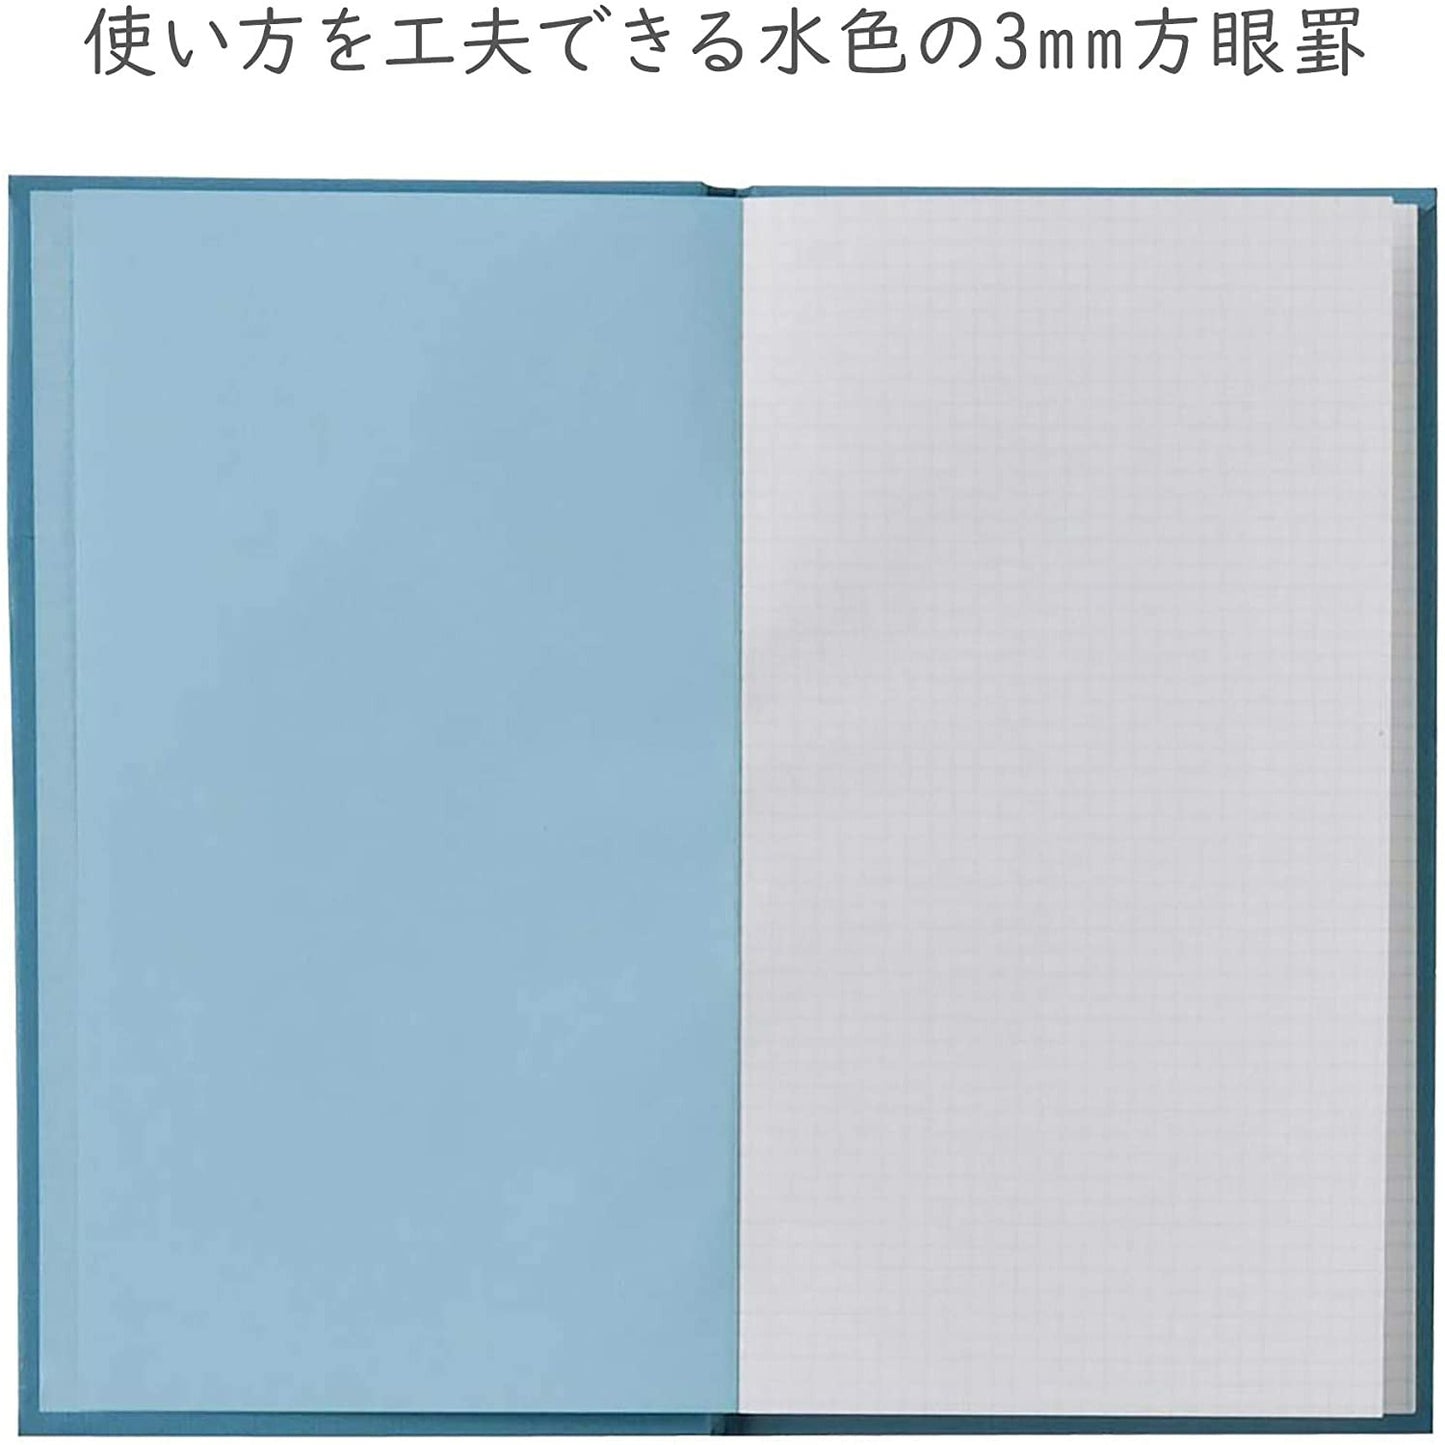 Kokuyo Field Note Sketch Book